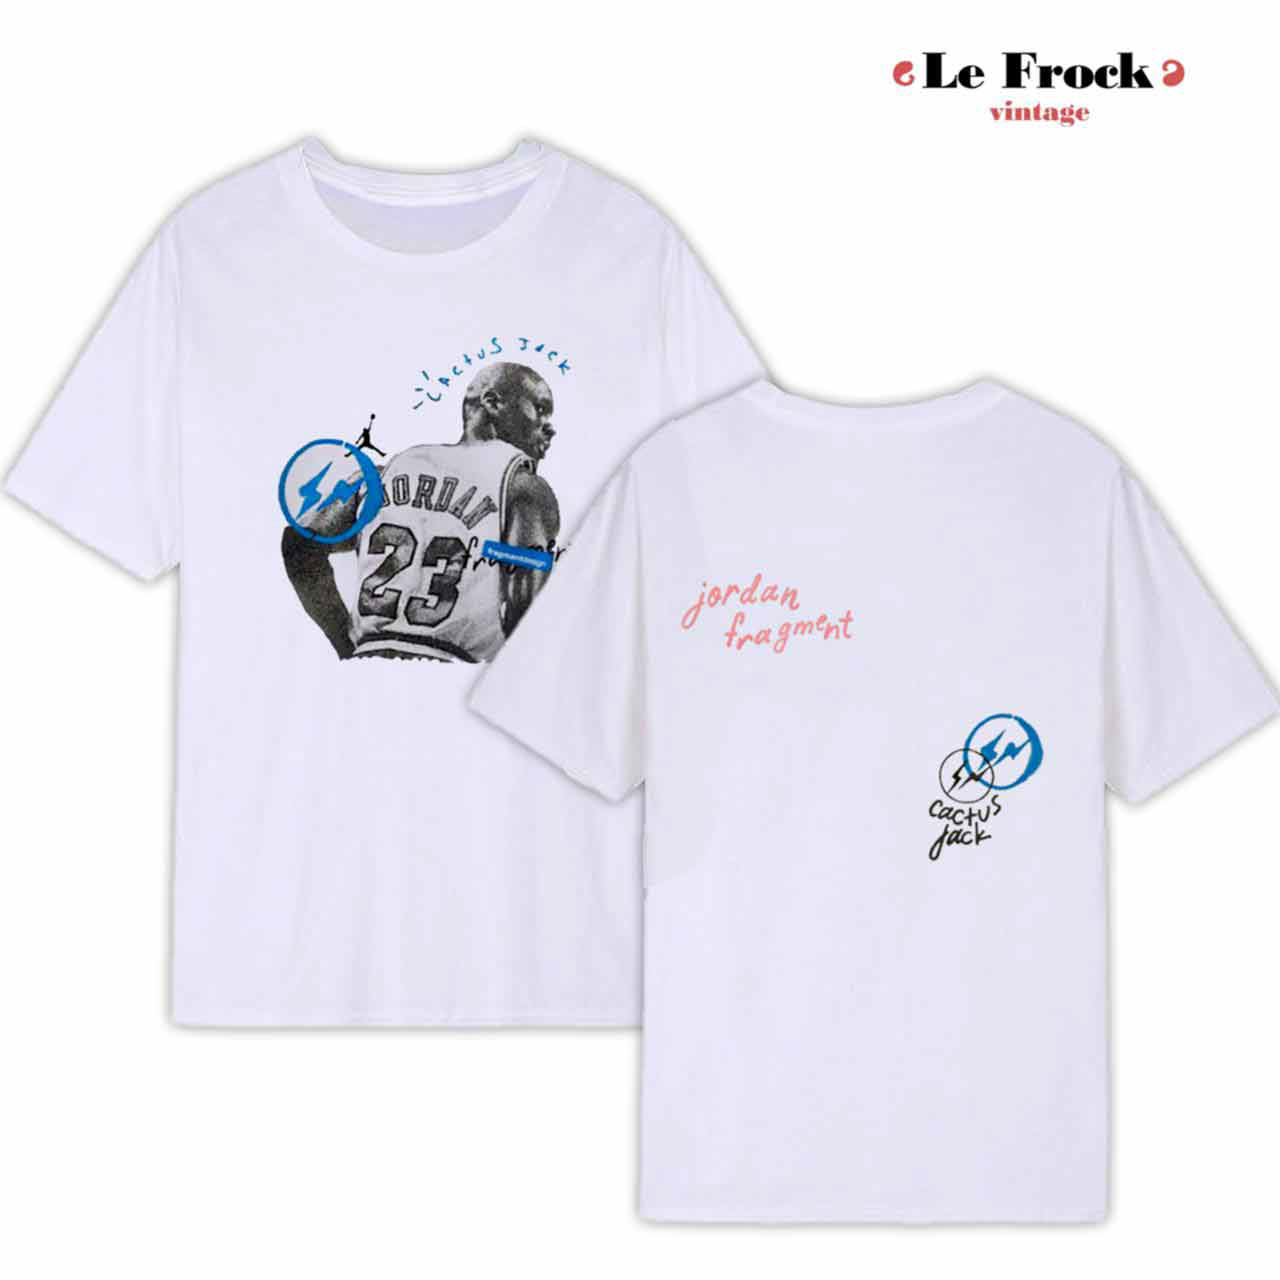 Travis Scott x Jordan x Fragment T-Shirt - Shop Now